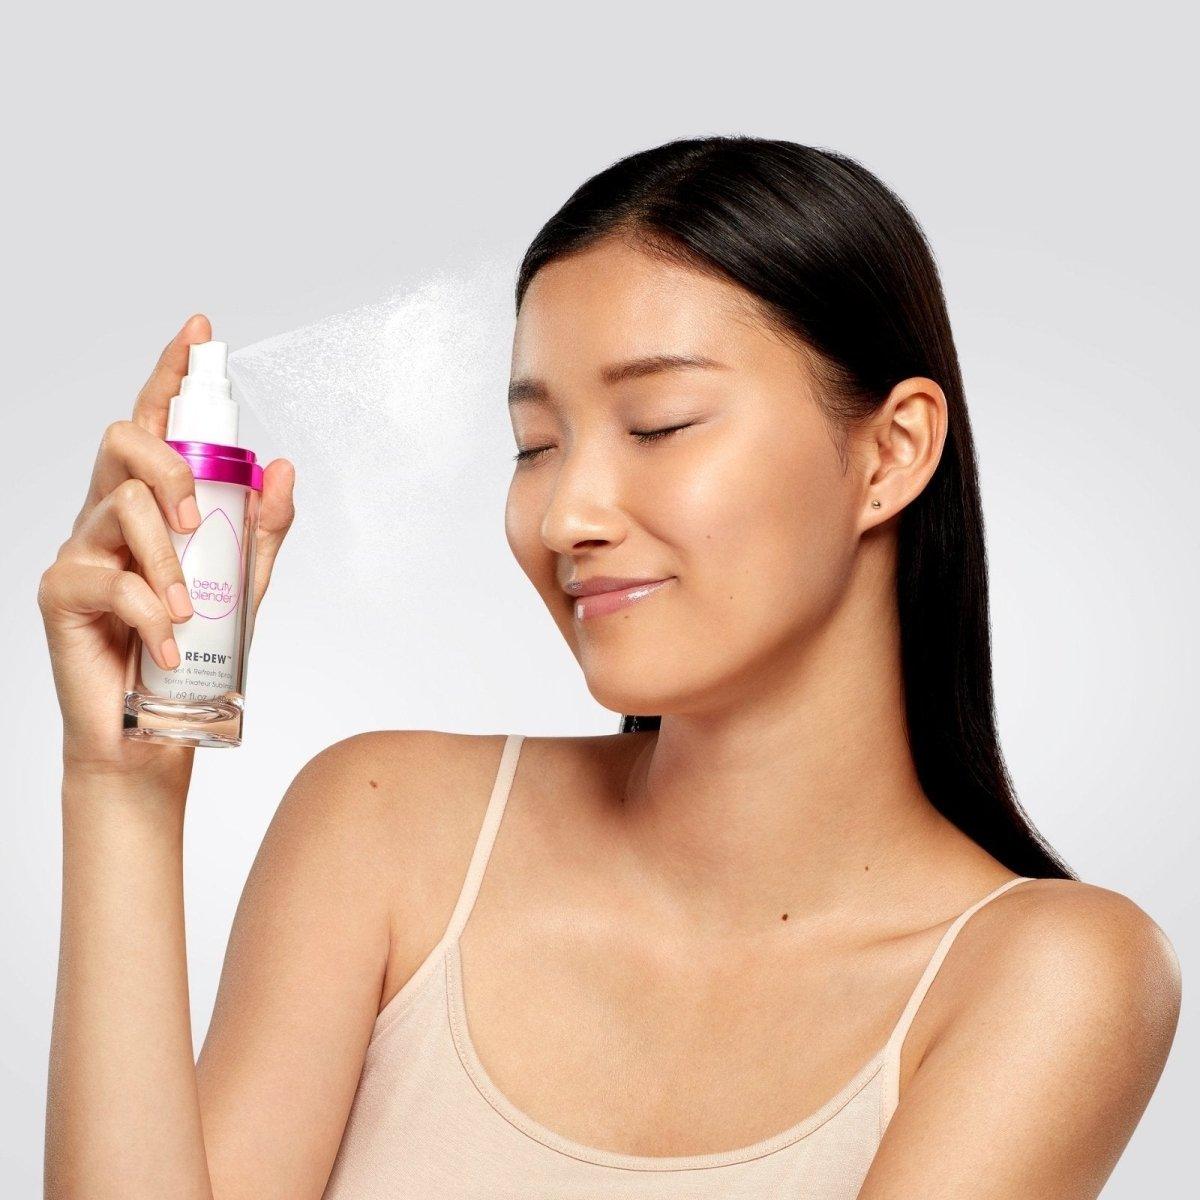 beautyblender | Re-Dew Set & Refresh Spray - DG International Ventures Limited